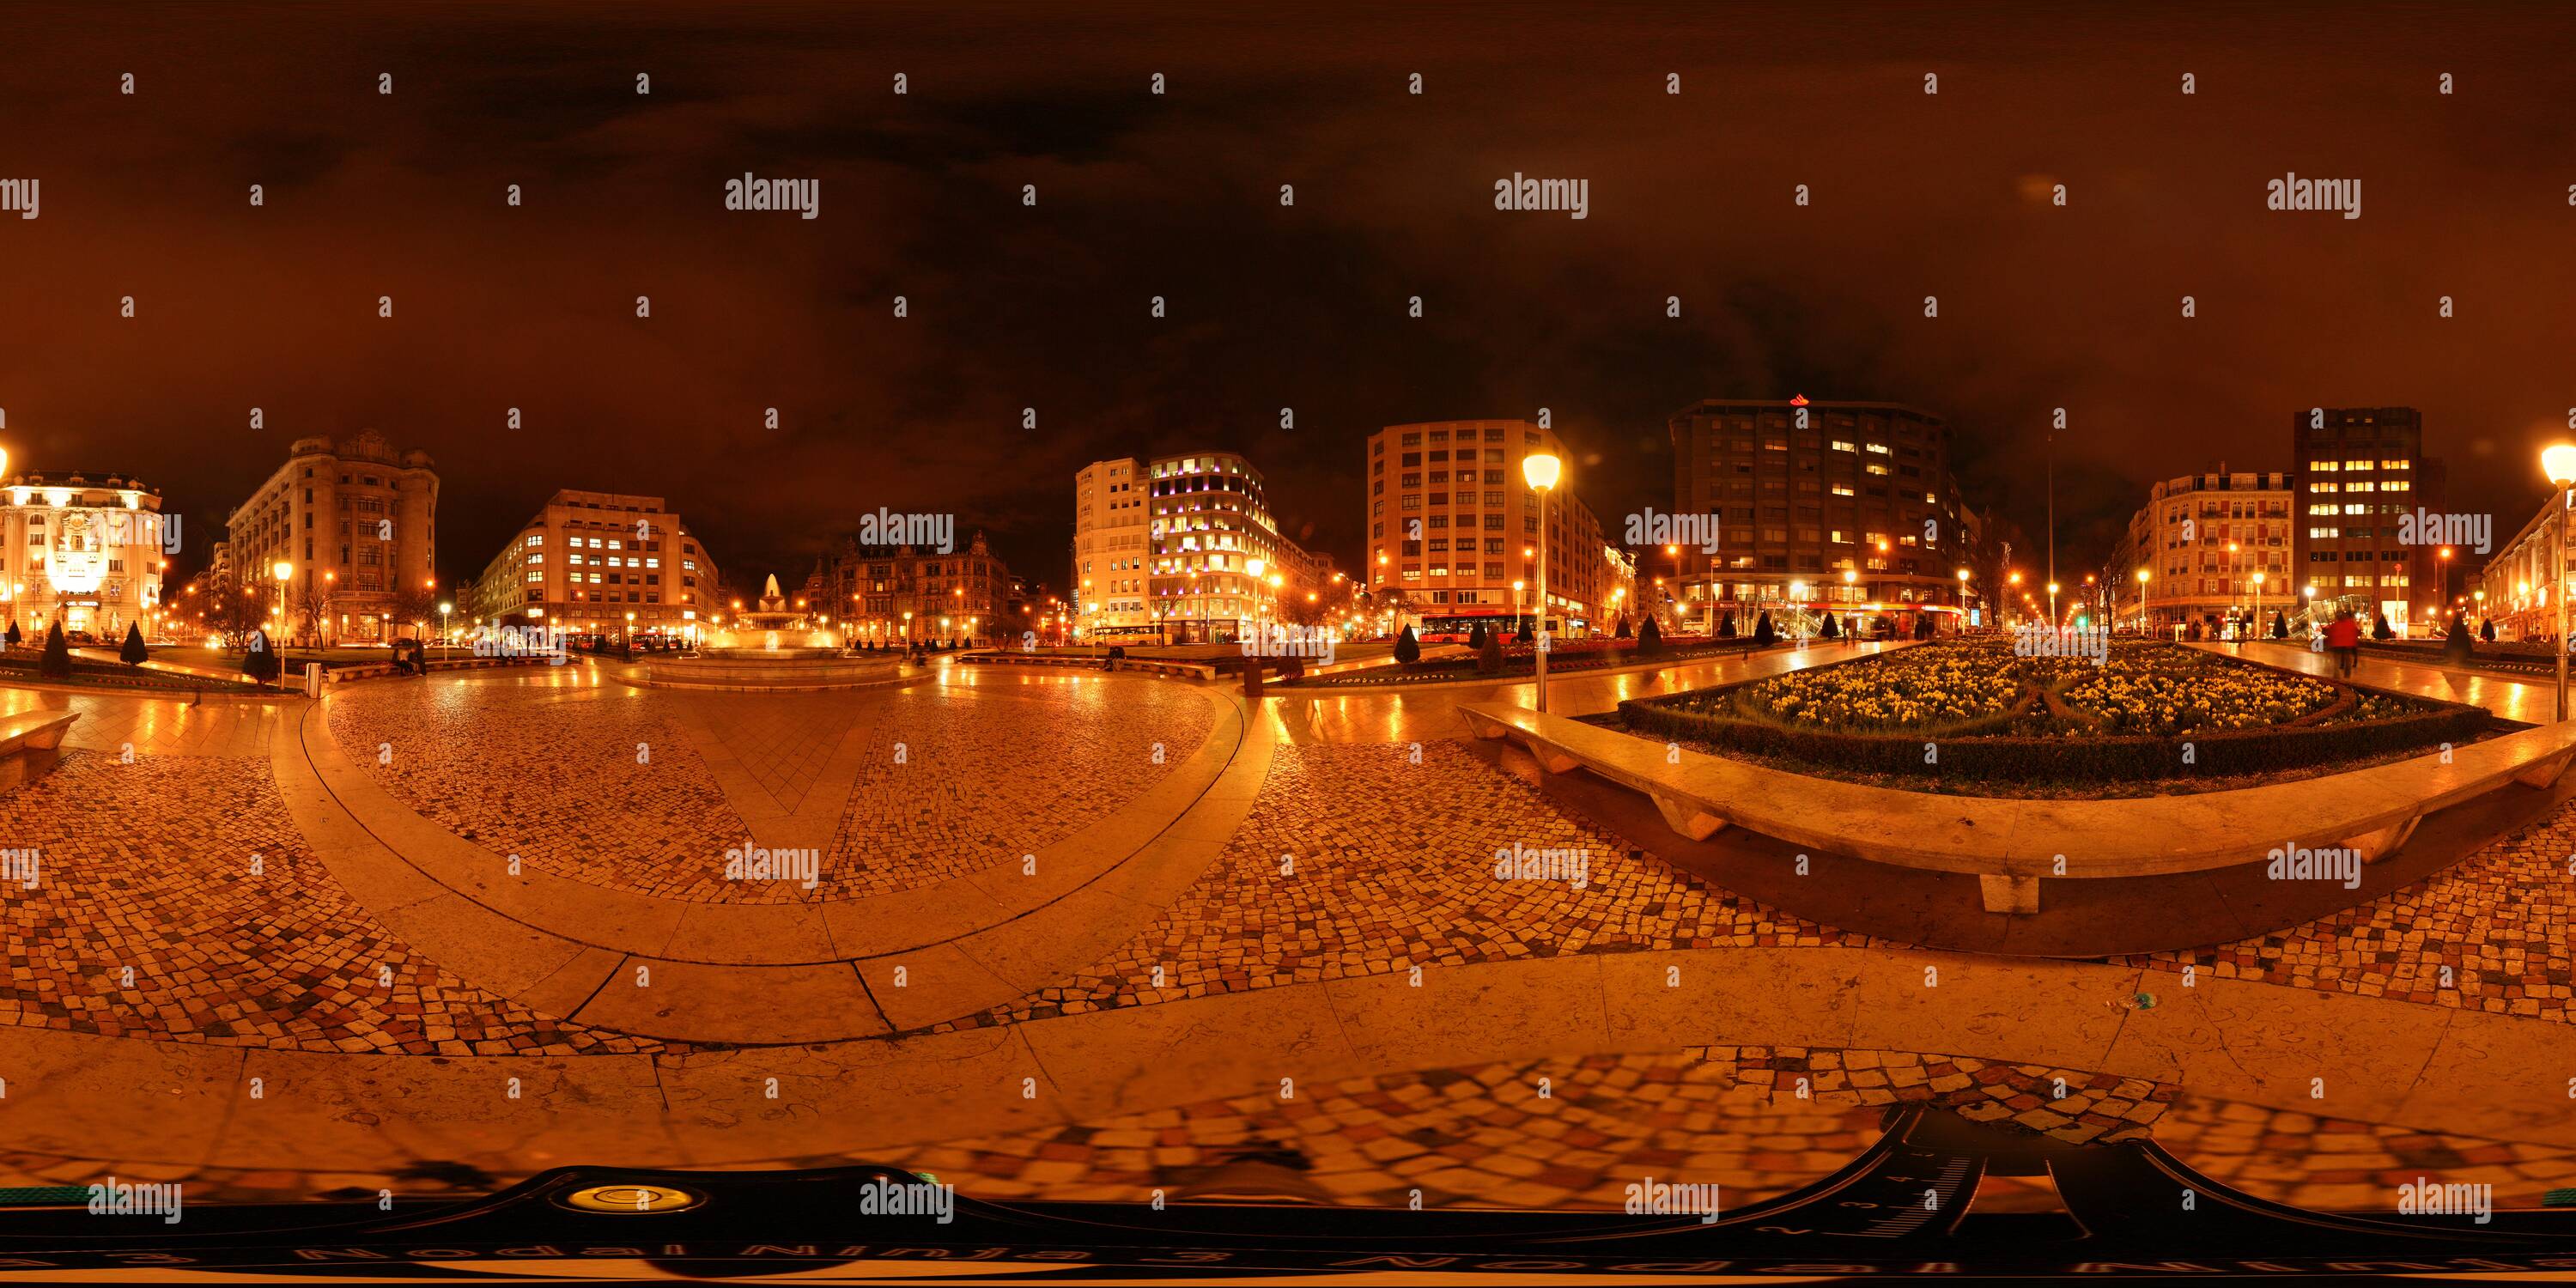 360 degree panoramic view of Plaza Eliptica